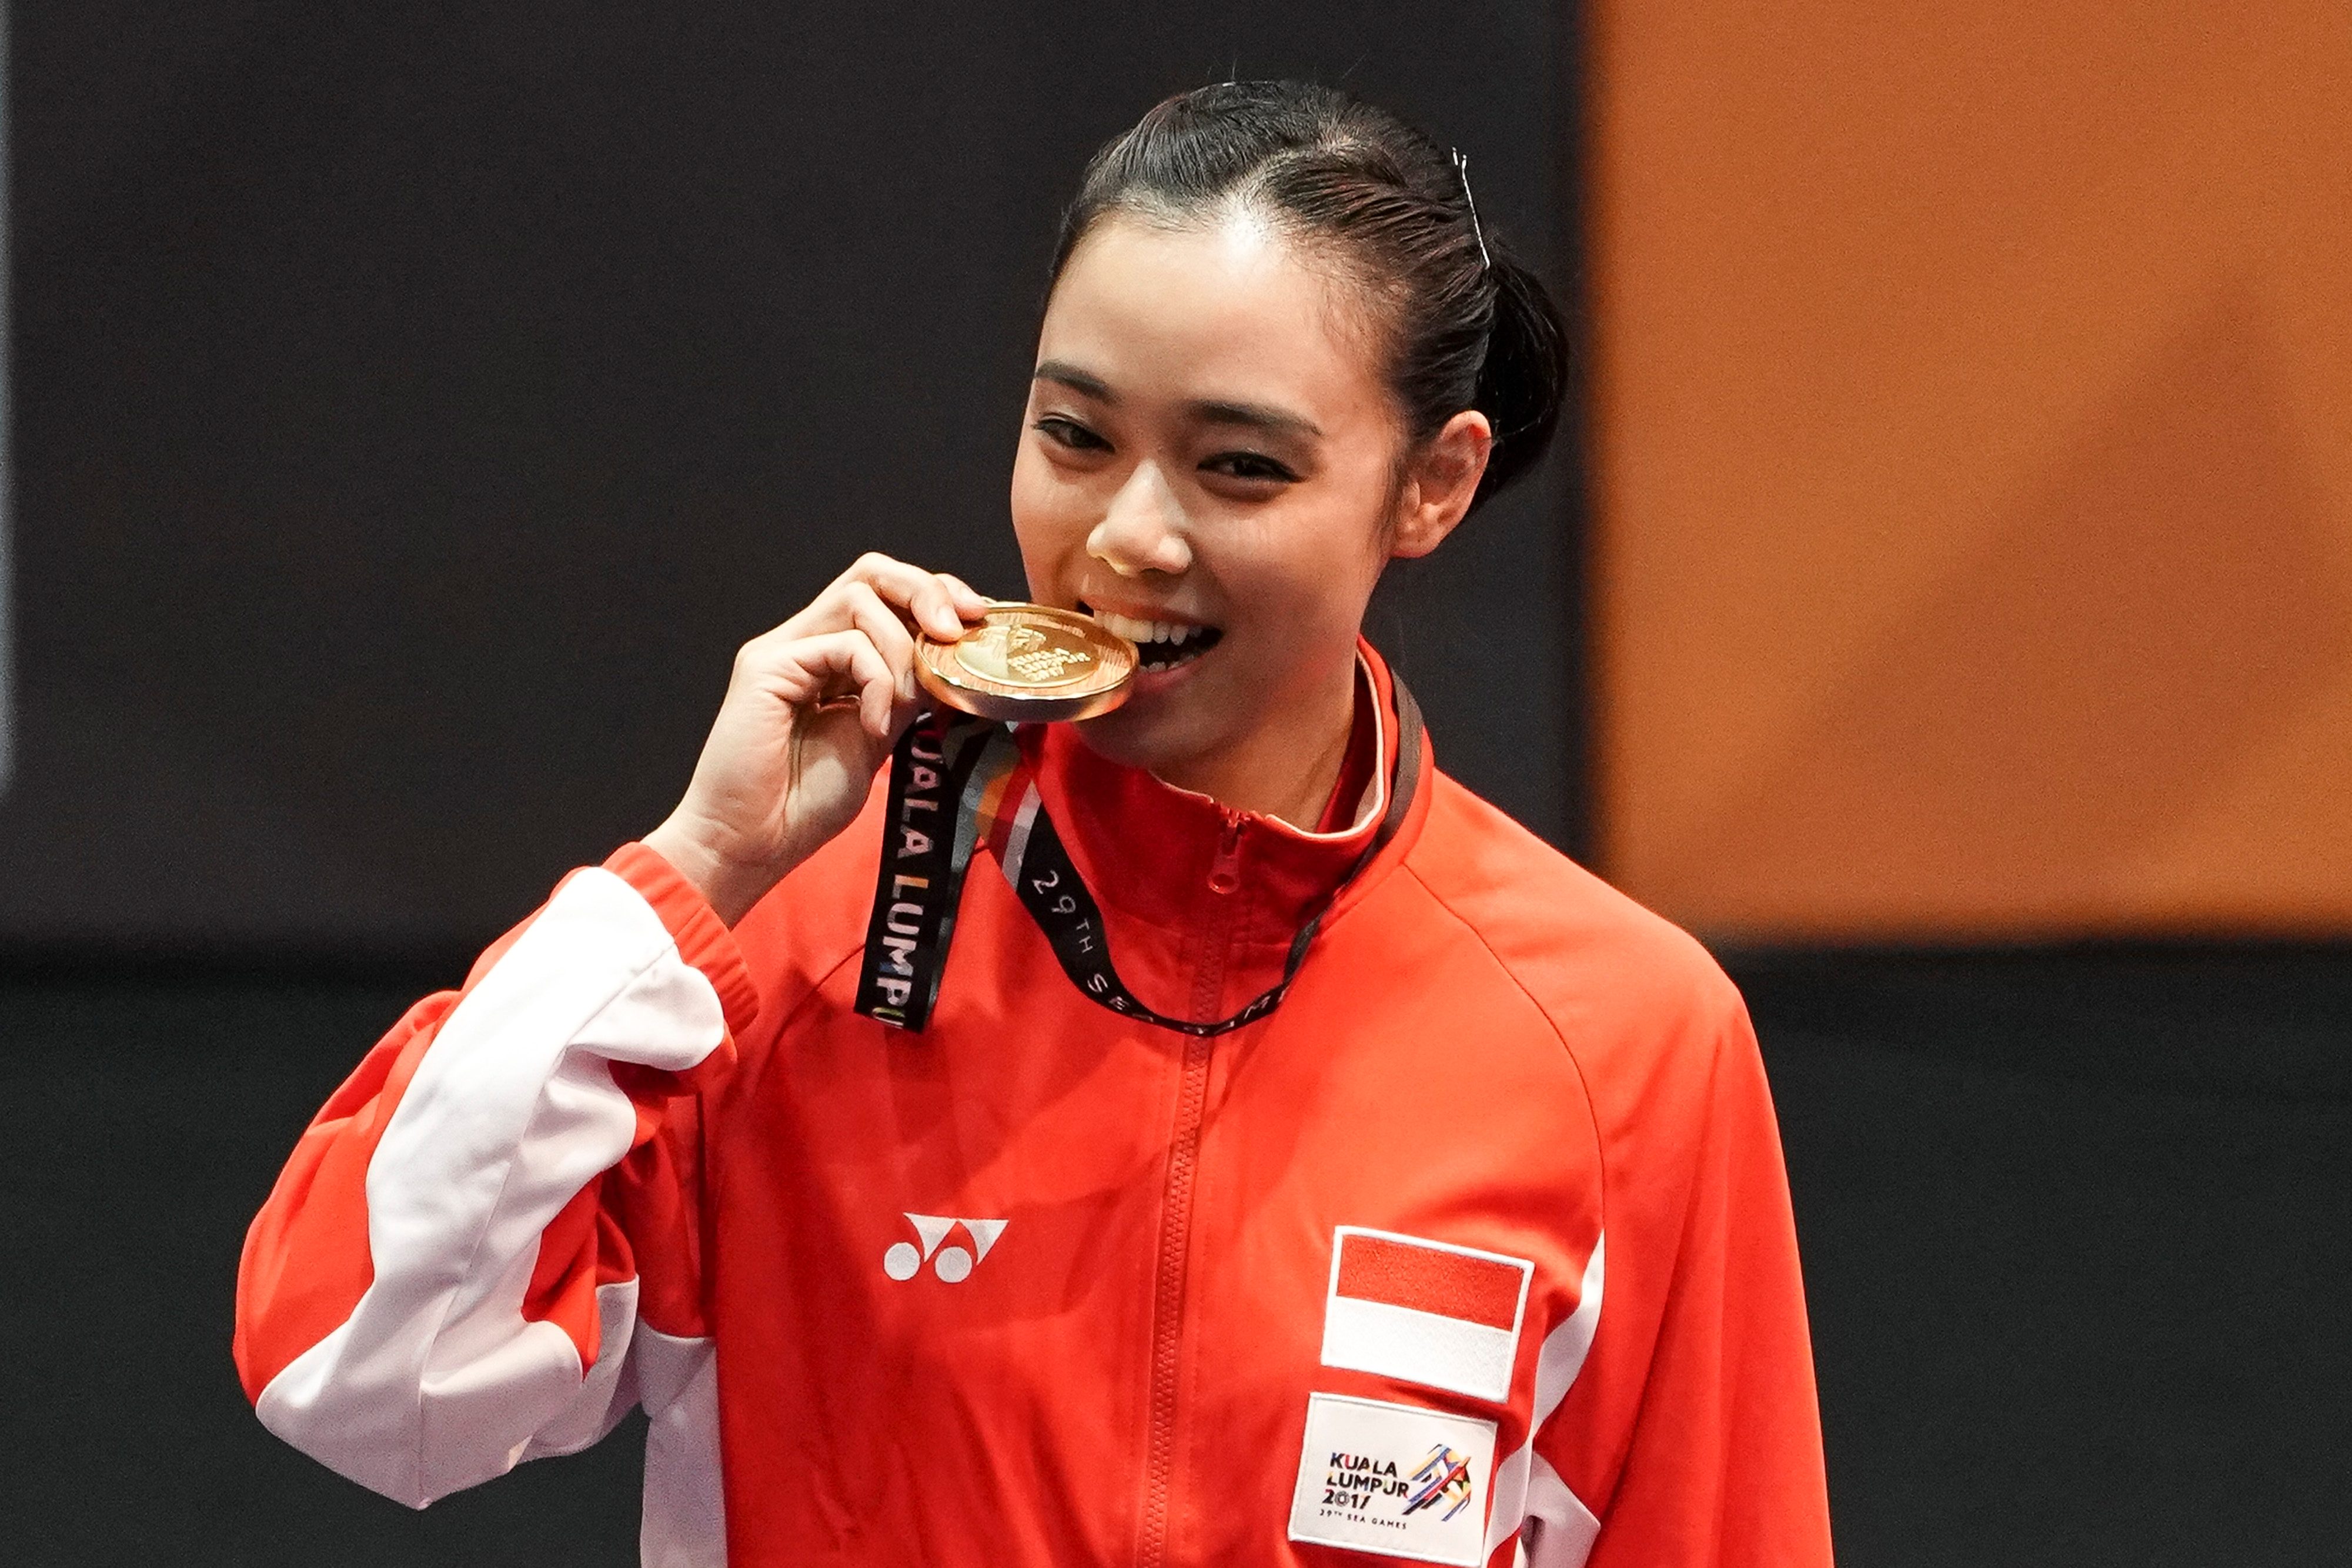 Atlet wushu Indonesia Lindswell Kwok menggigit medali ketika upacara penyerahan medali wushu nomor Taijijian putri di KLCC, Kuala Lumpur, Malaysia, pada 21 Agustus 2017. Foto oleh Wahyu Putro A/Antara
 